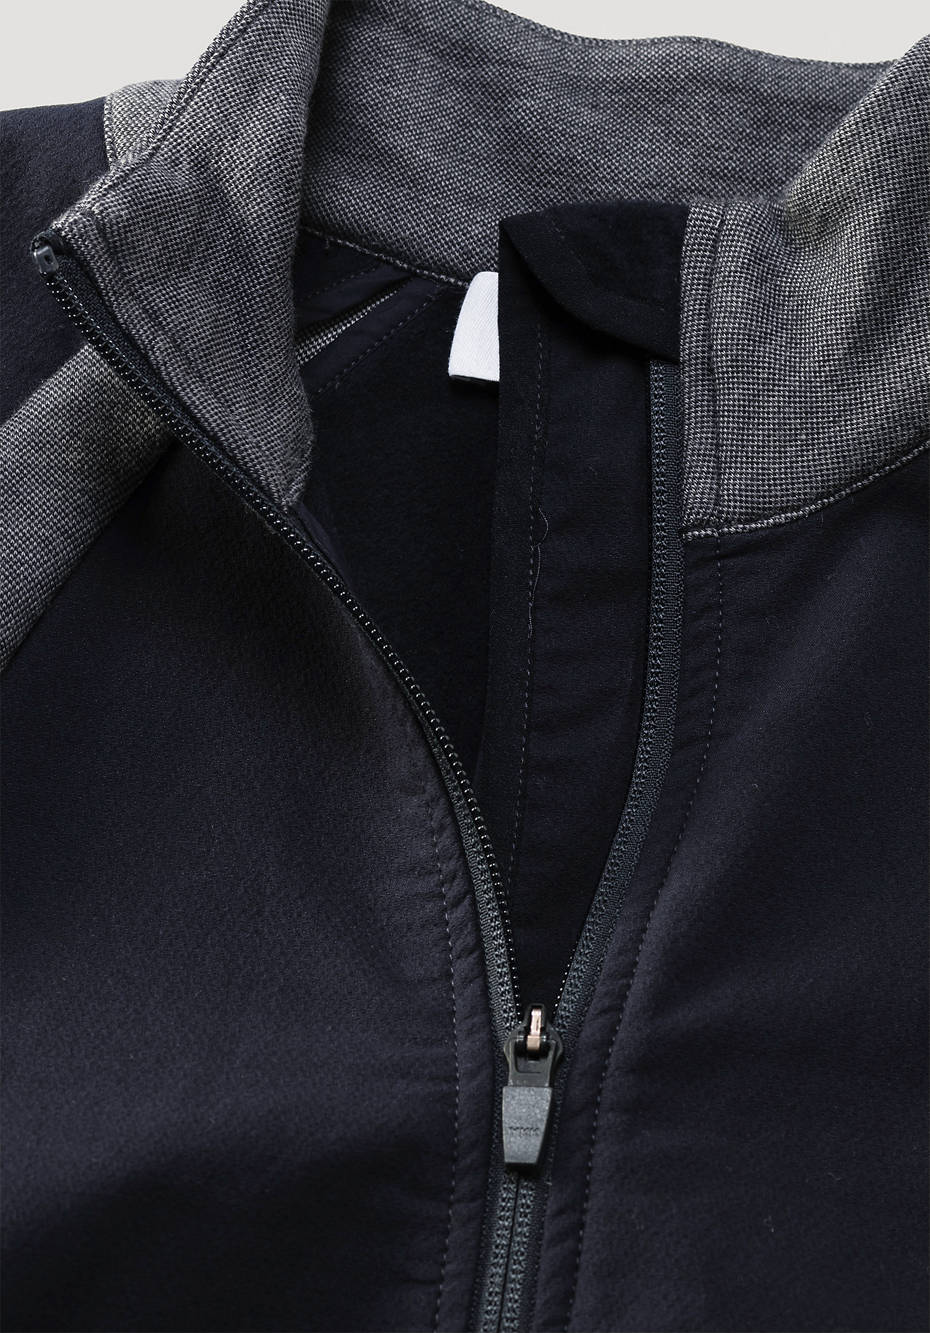 Softshell hybrid jacket made of organic cotton with organic merino wool